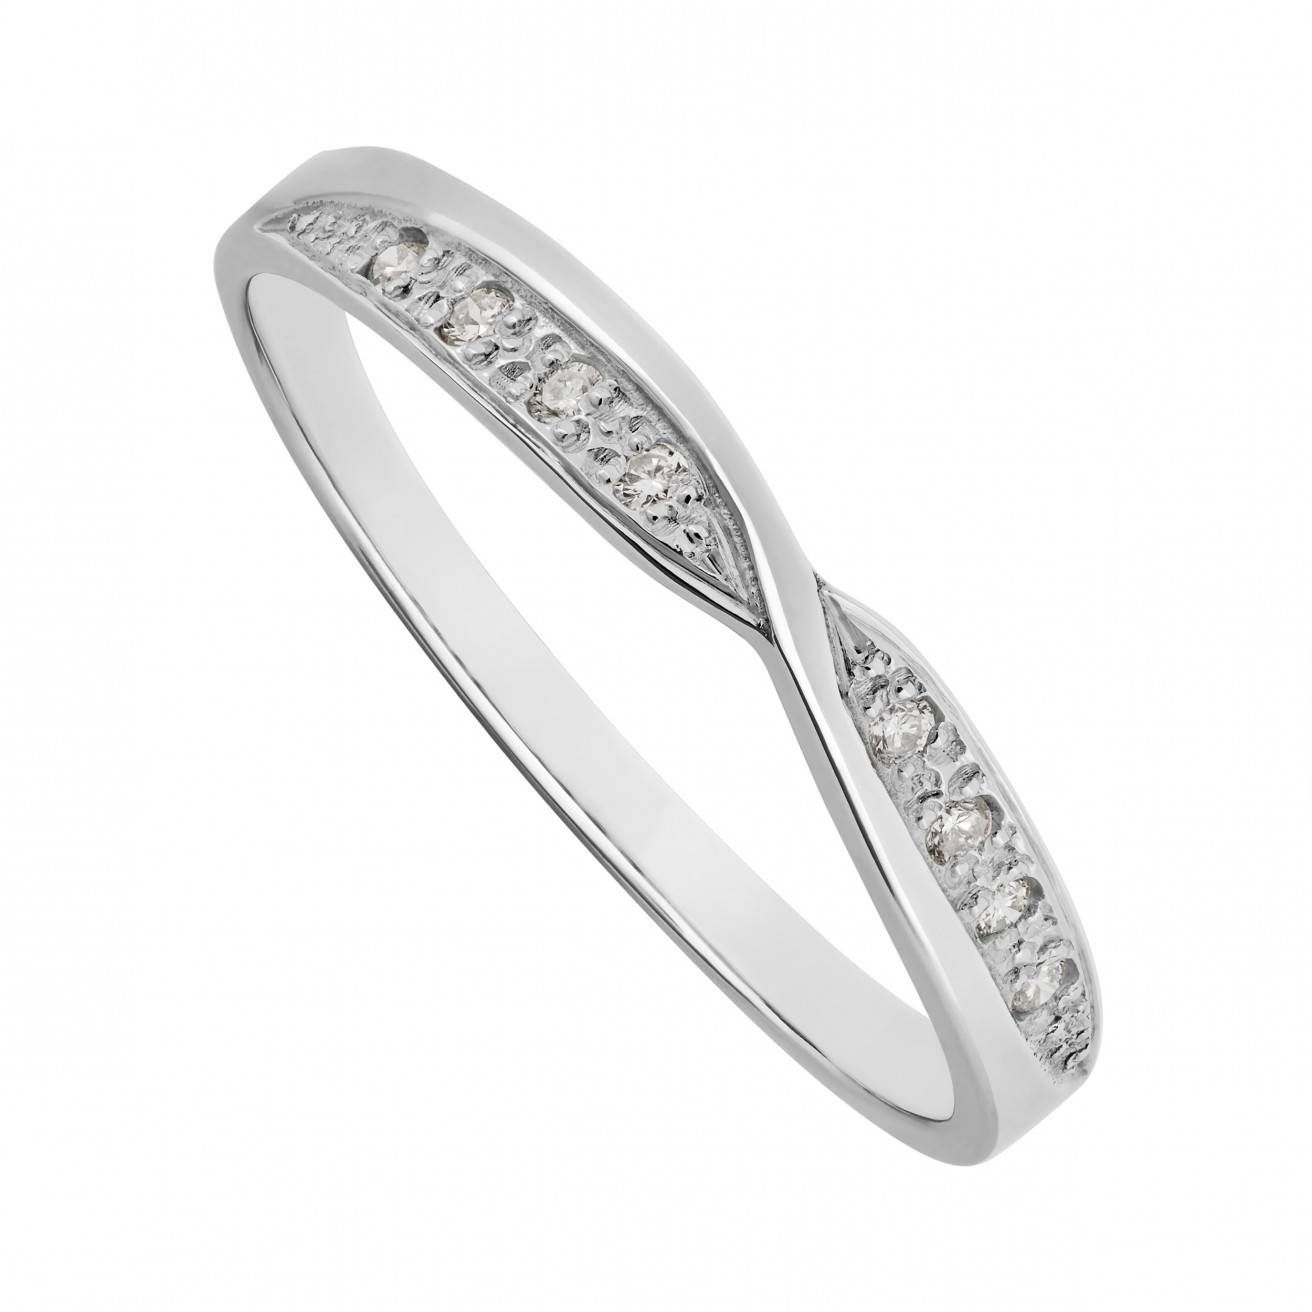 Buy White Gold Wedding Rings Online – Fraser Hart Regarding White Gold Wedding Rings With Diamonds (View 3 of 15)